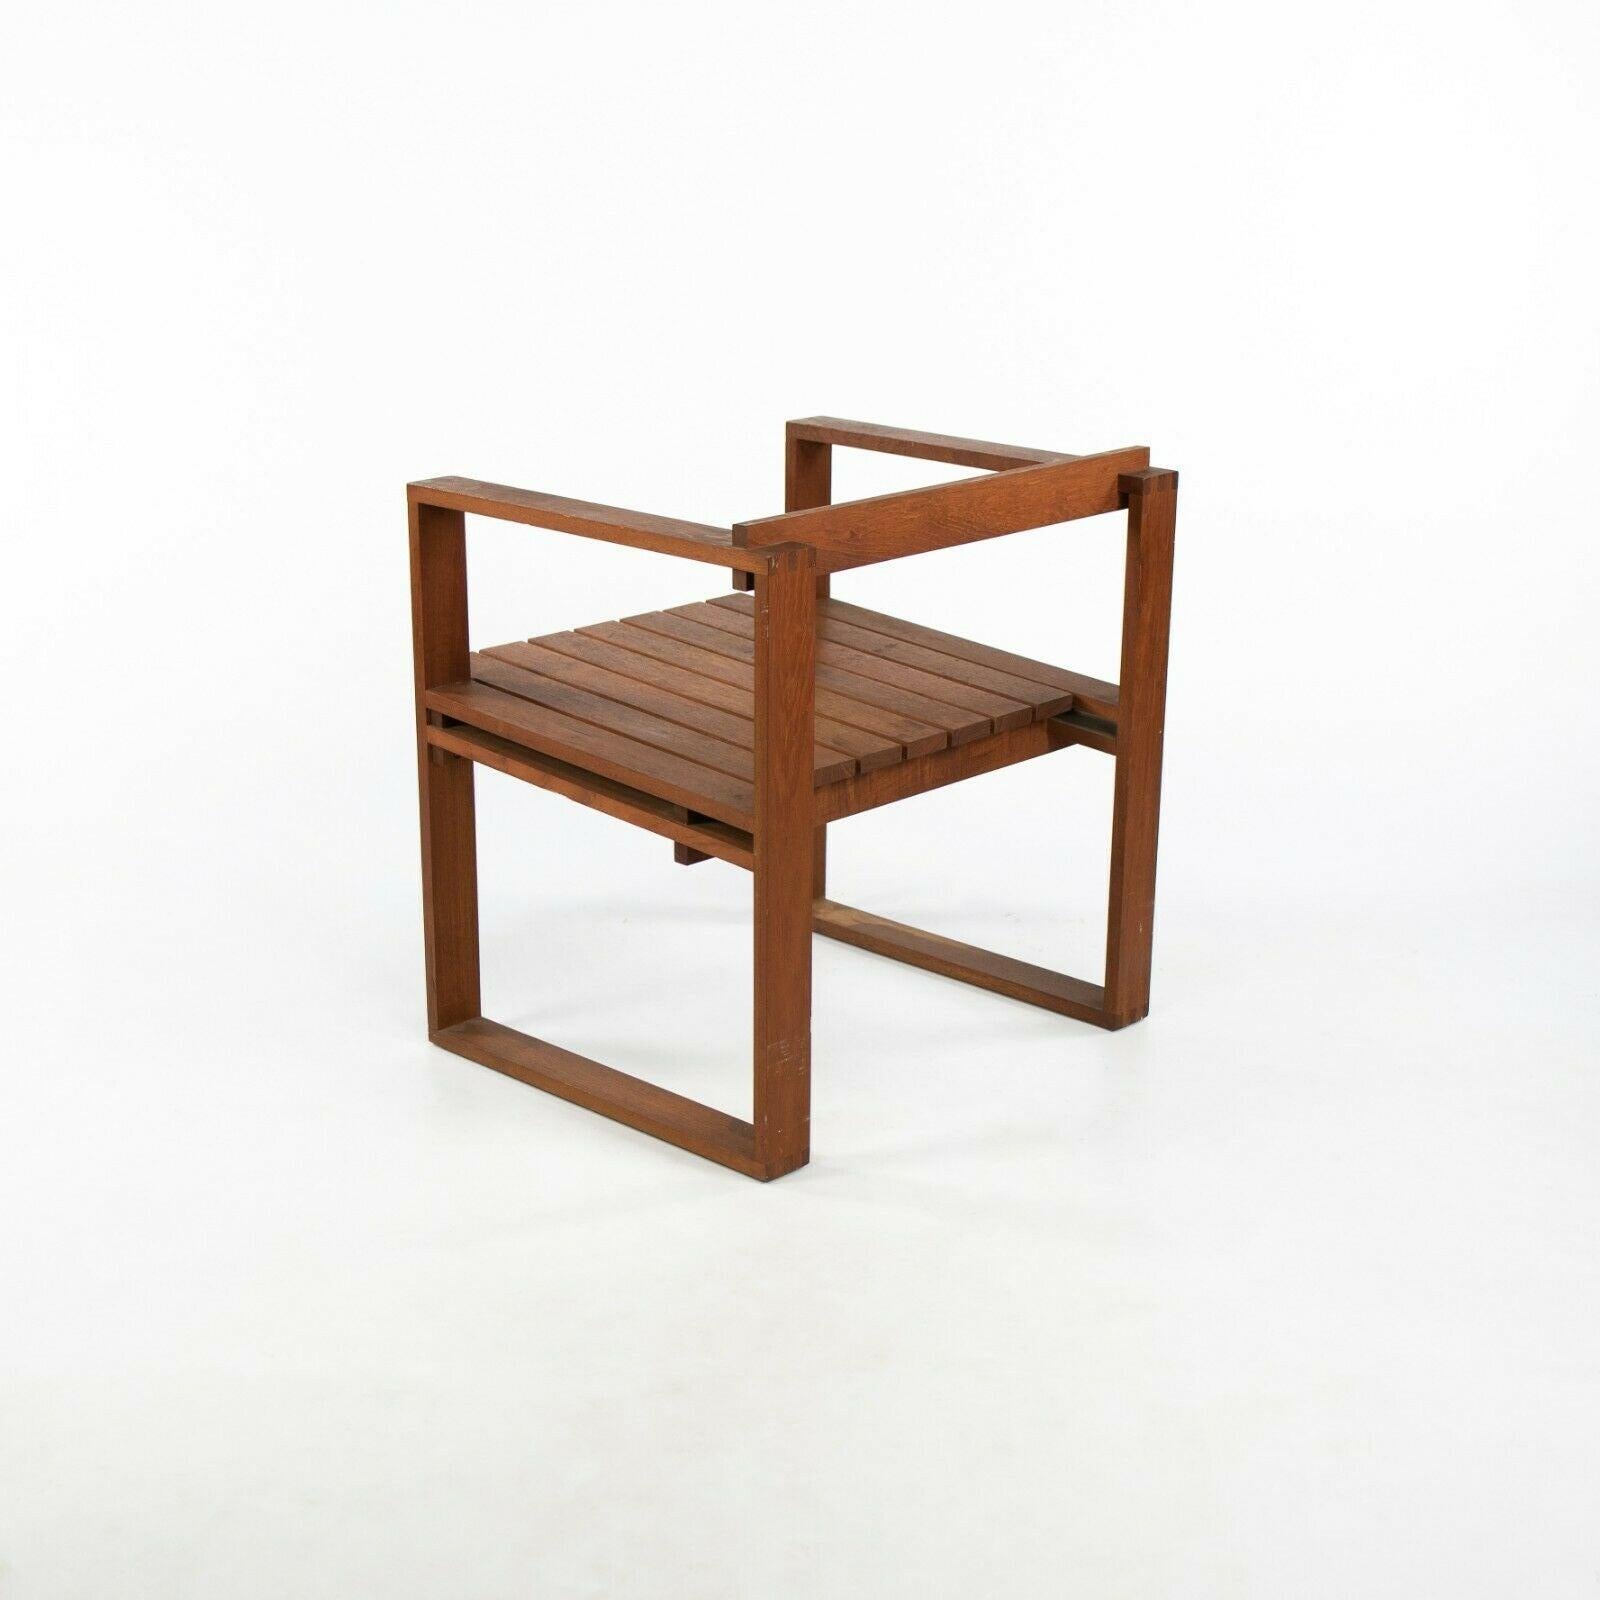 1975 Bodil Kjaer for CI Designs Rare Teak Slat Seat Arm Chair In Good Condition For Sale In Philadelphia, PA